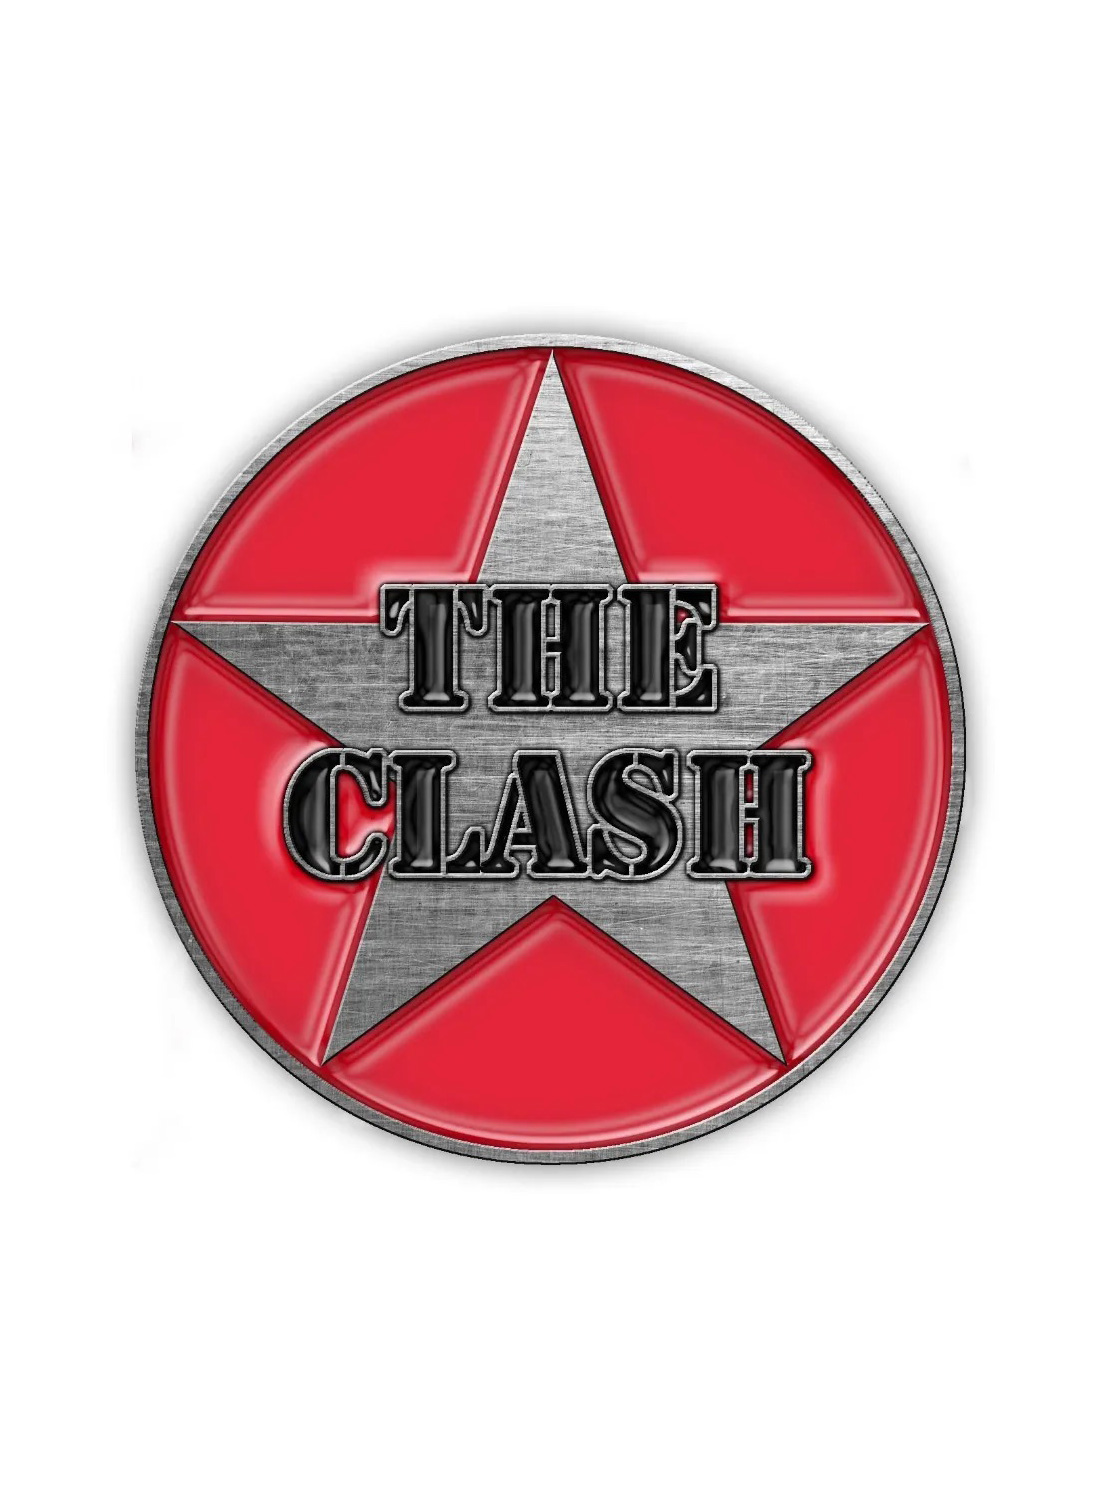 The Clash Metal Pin Badge